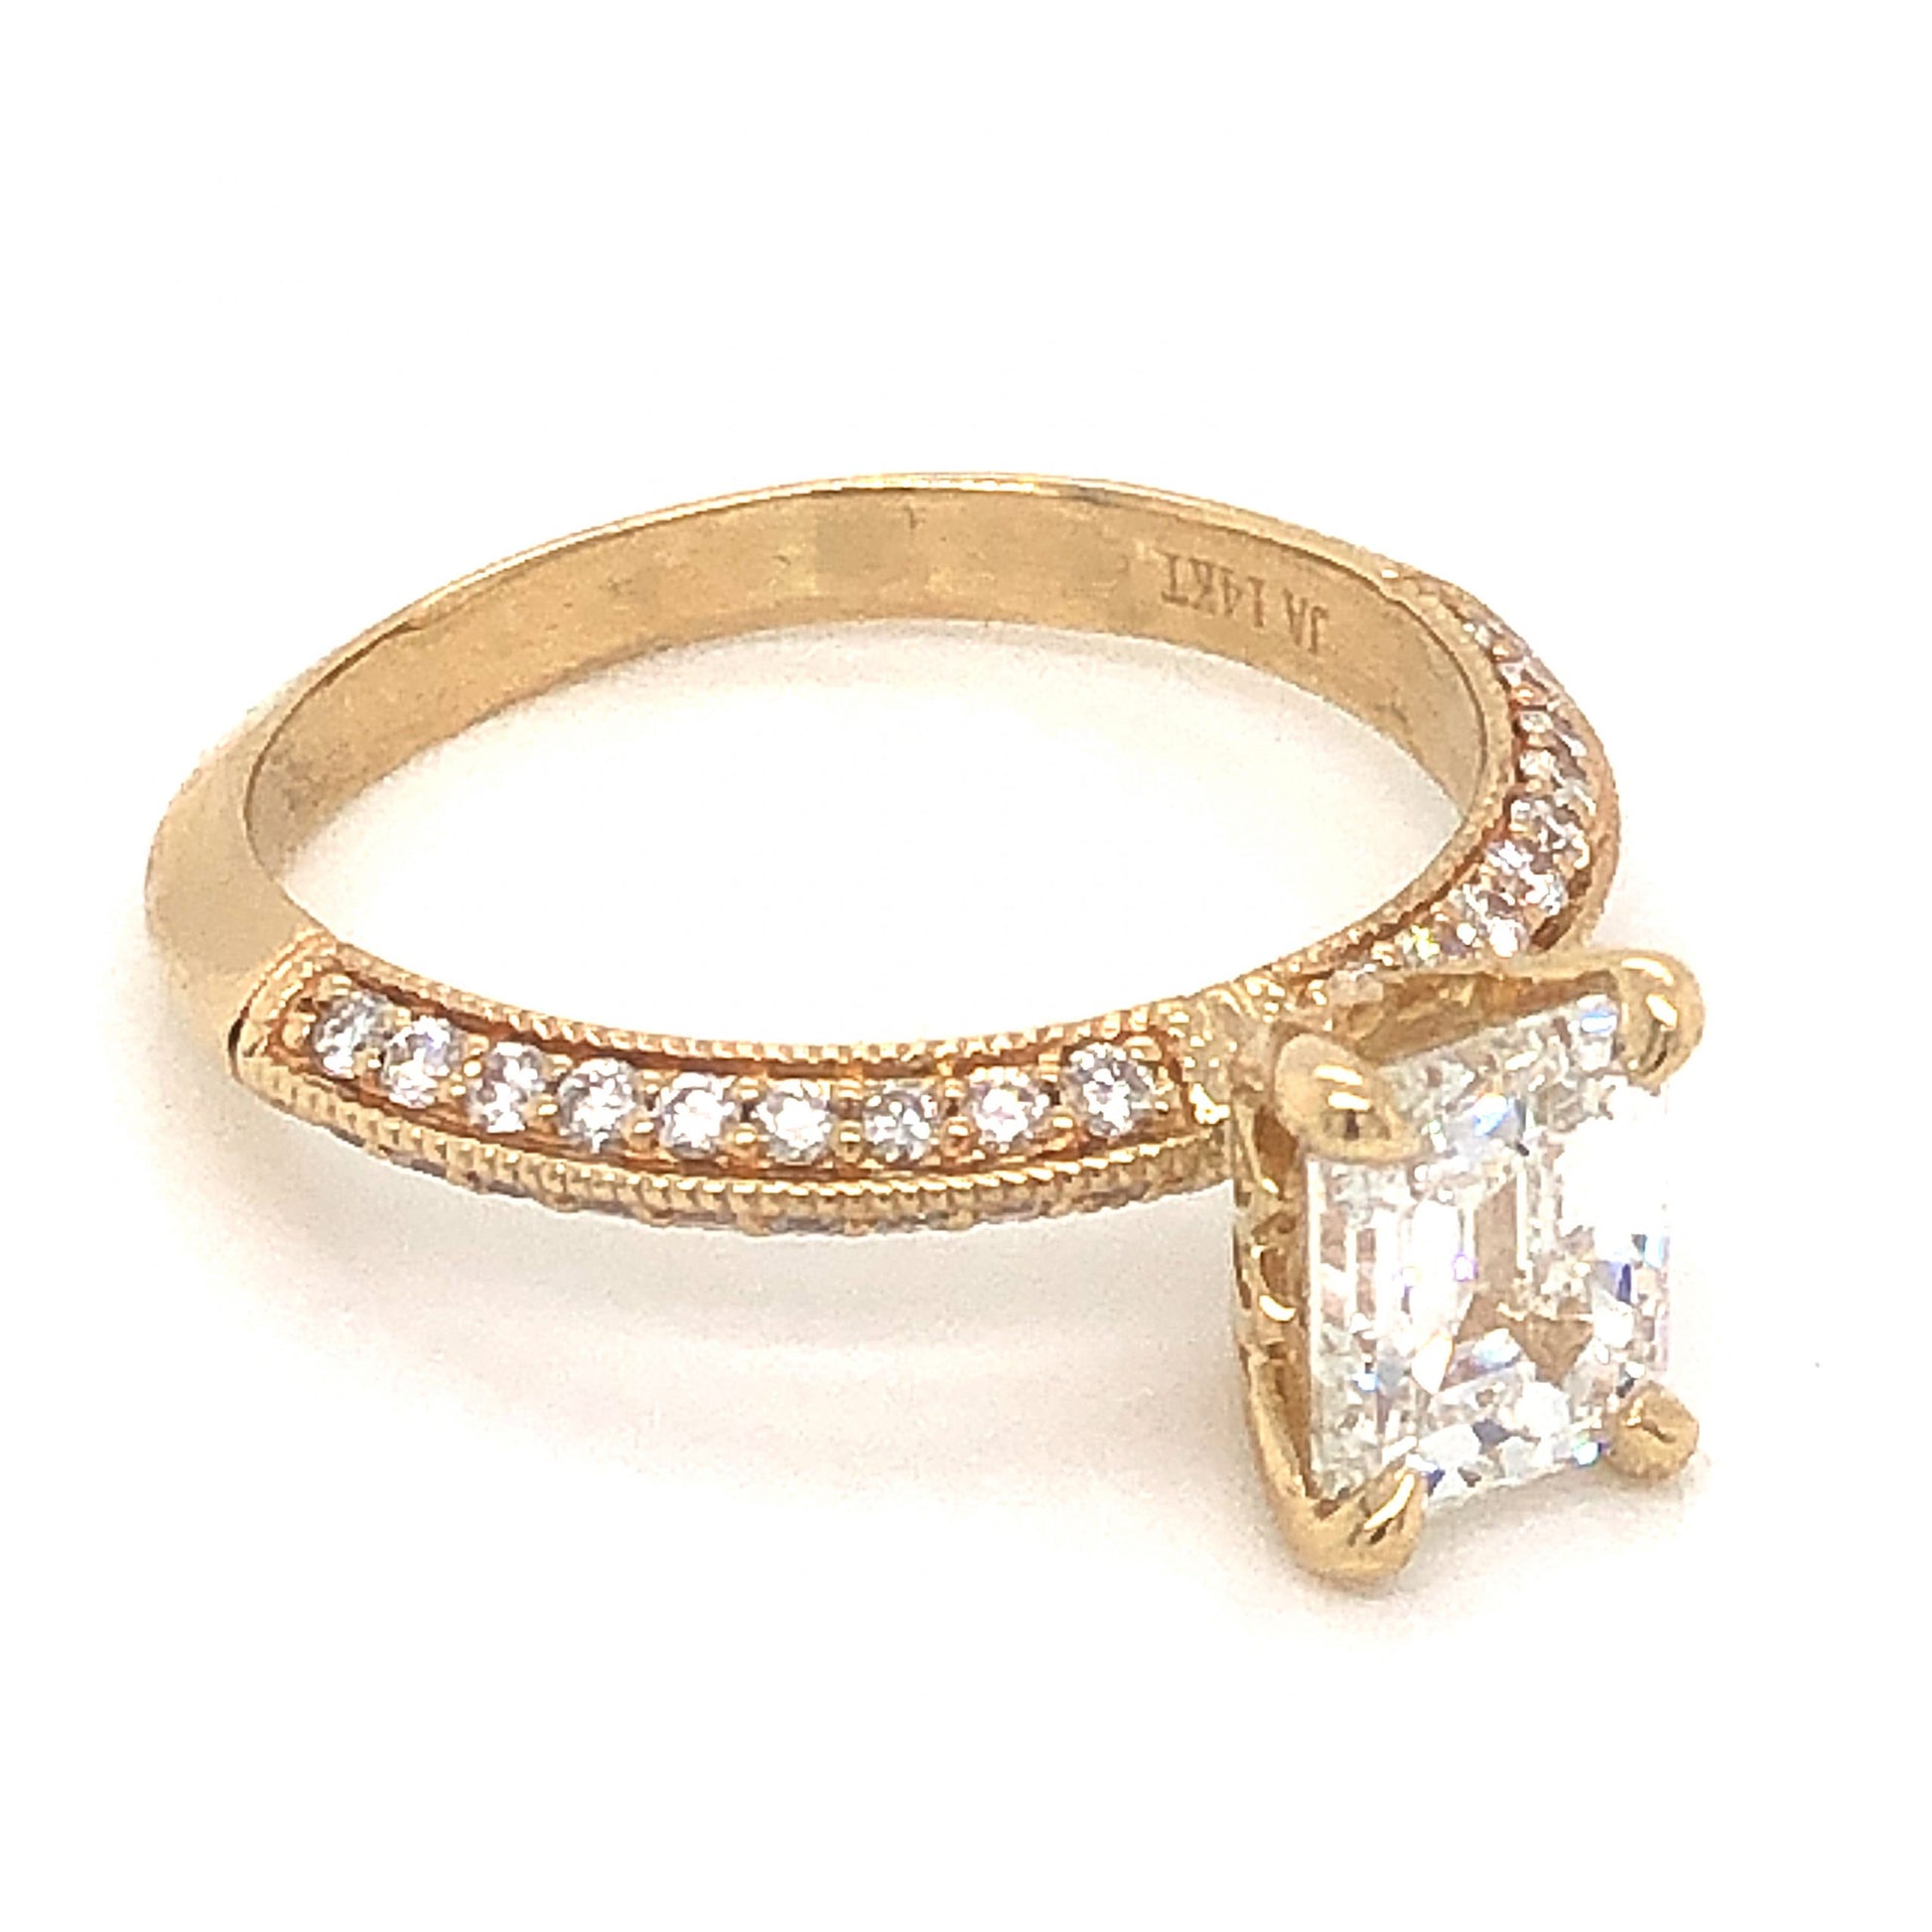 1.20 Emerald Cut Diamond Engagement Ring in 14k Yellow Gold